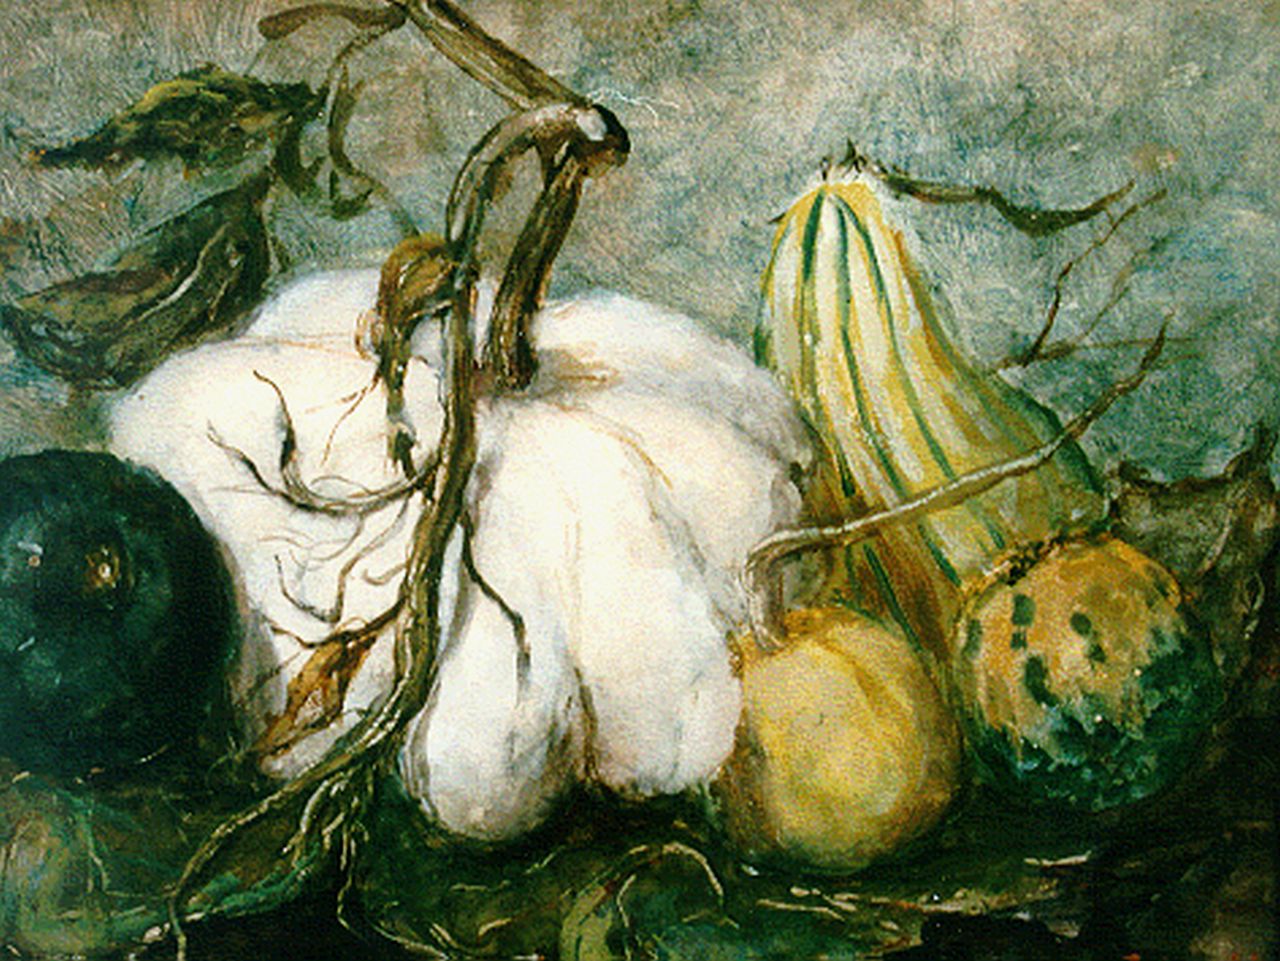 Mesdag-van Houten S.  | Sina 'Sientje' Mesdag-van Houten, Still life with pumpkins, Aquarell auf Papier 27,3 x 37,8 cm, signed l.r. with initials